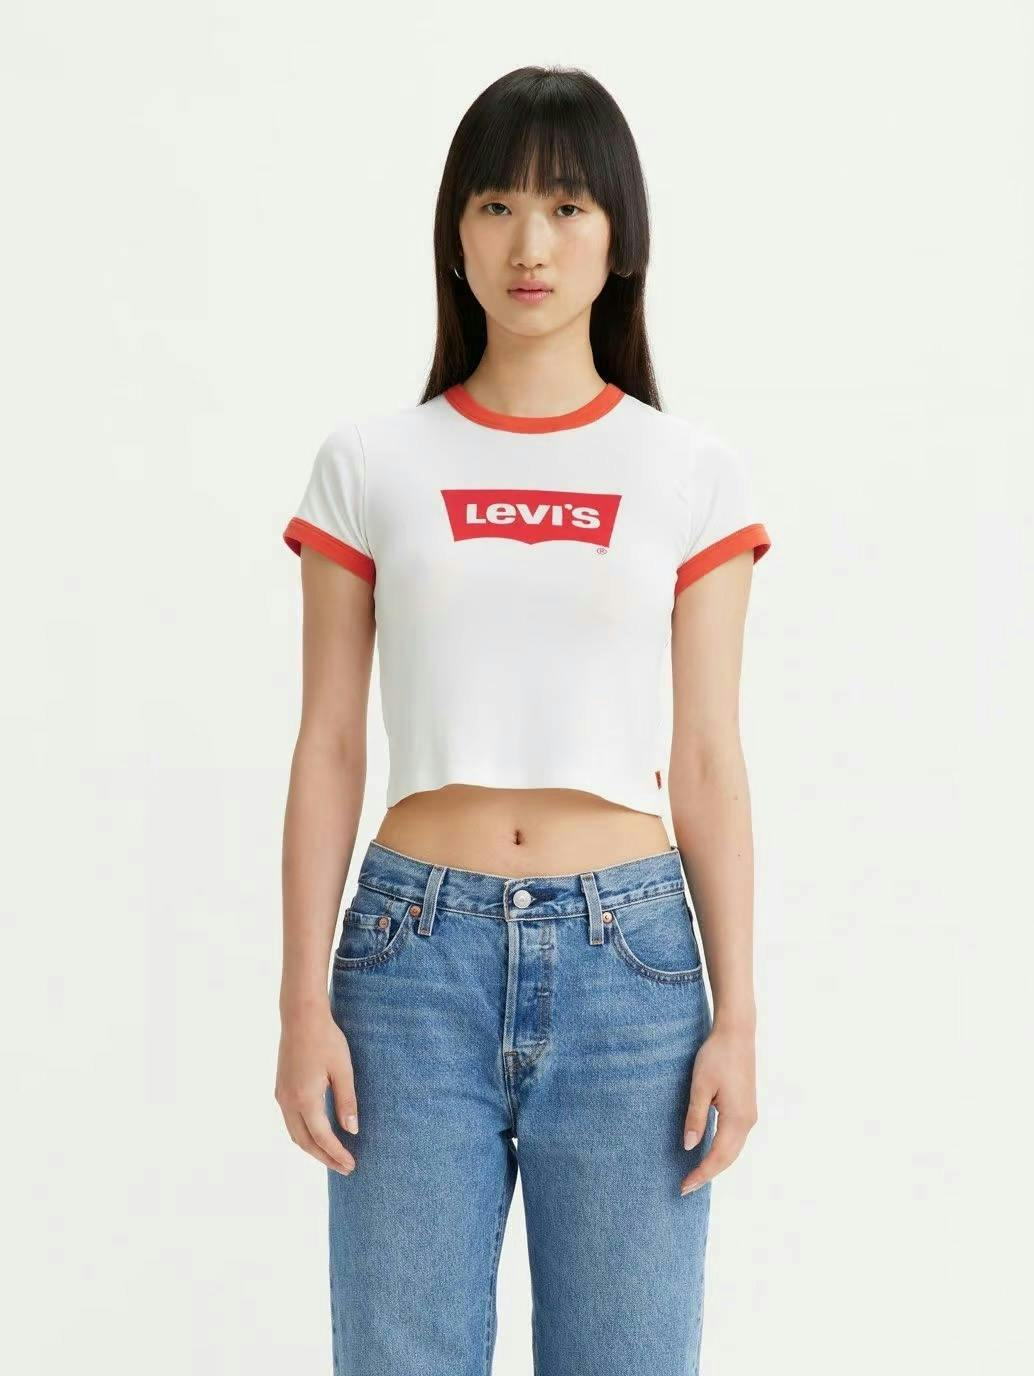 t-shirt sleeve pants female girl person teen blouse shirt jeans